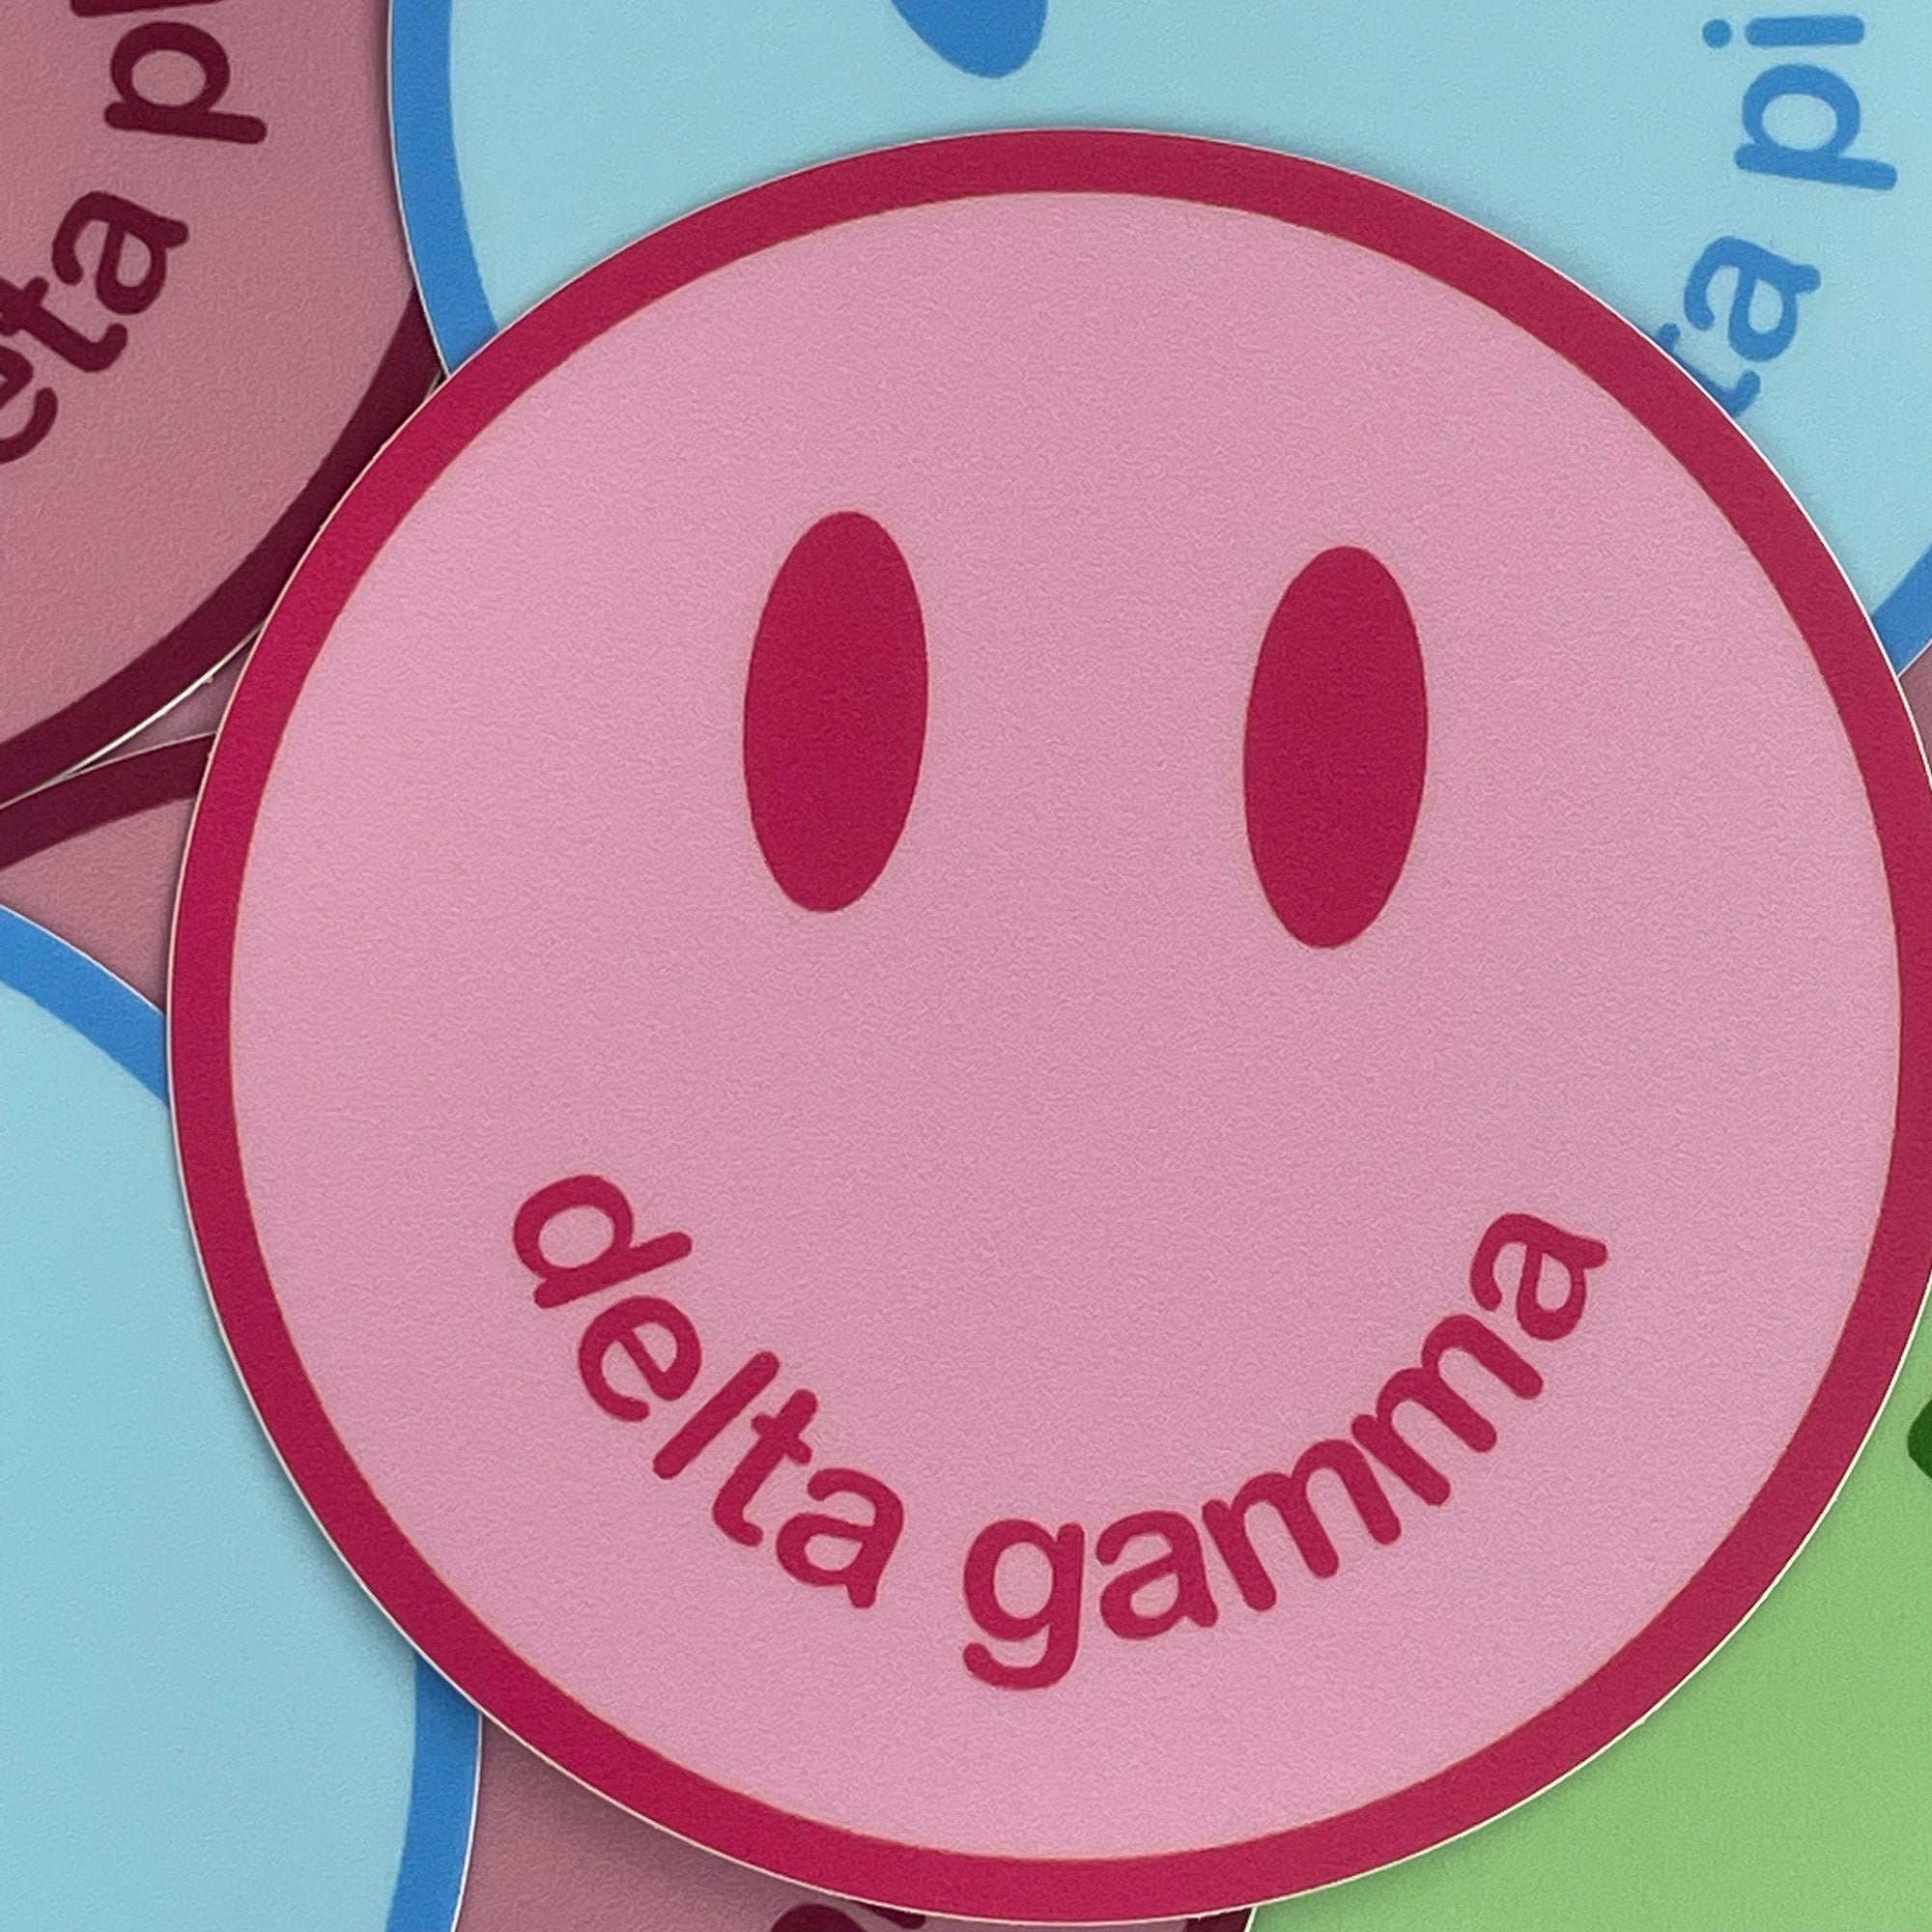 Delta Gamma Smiley Face Sticker - Go Greek Chic